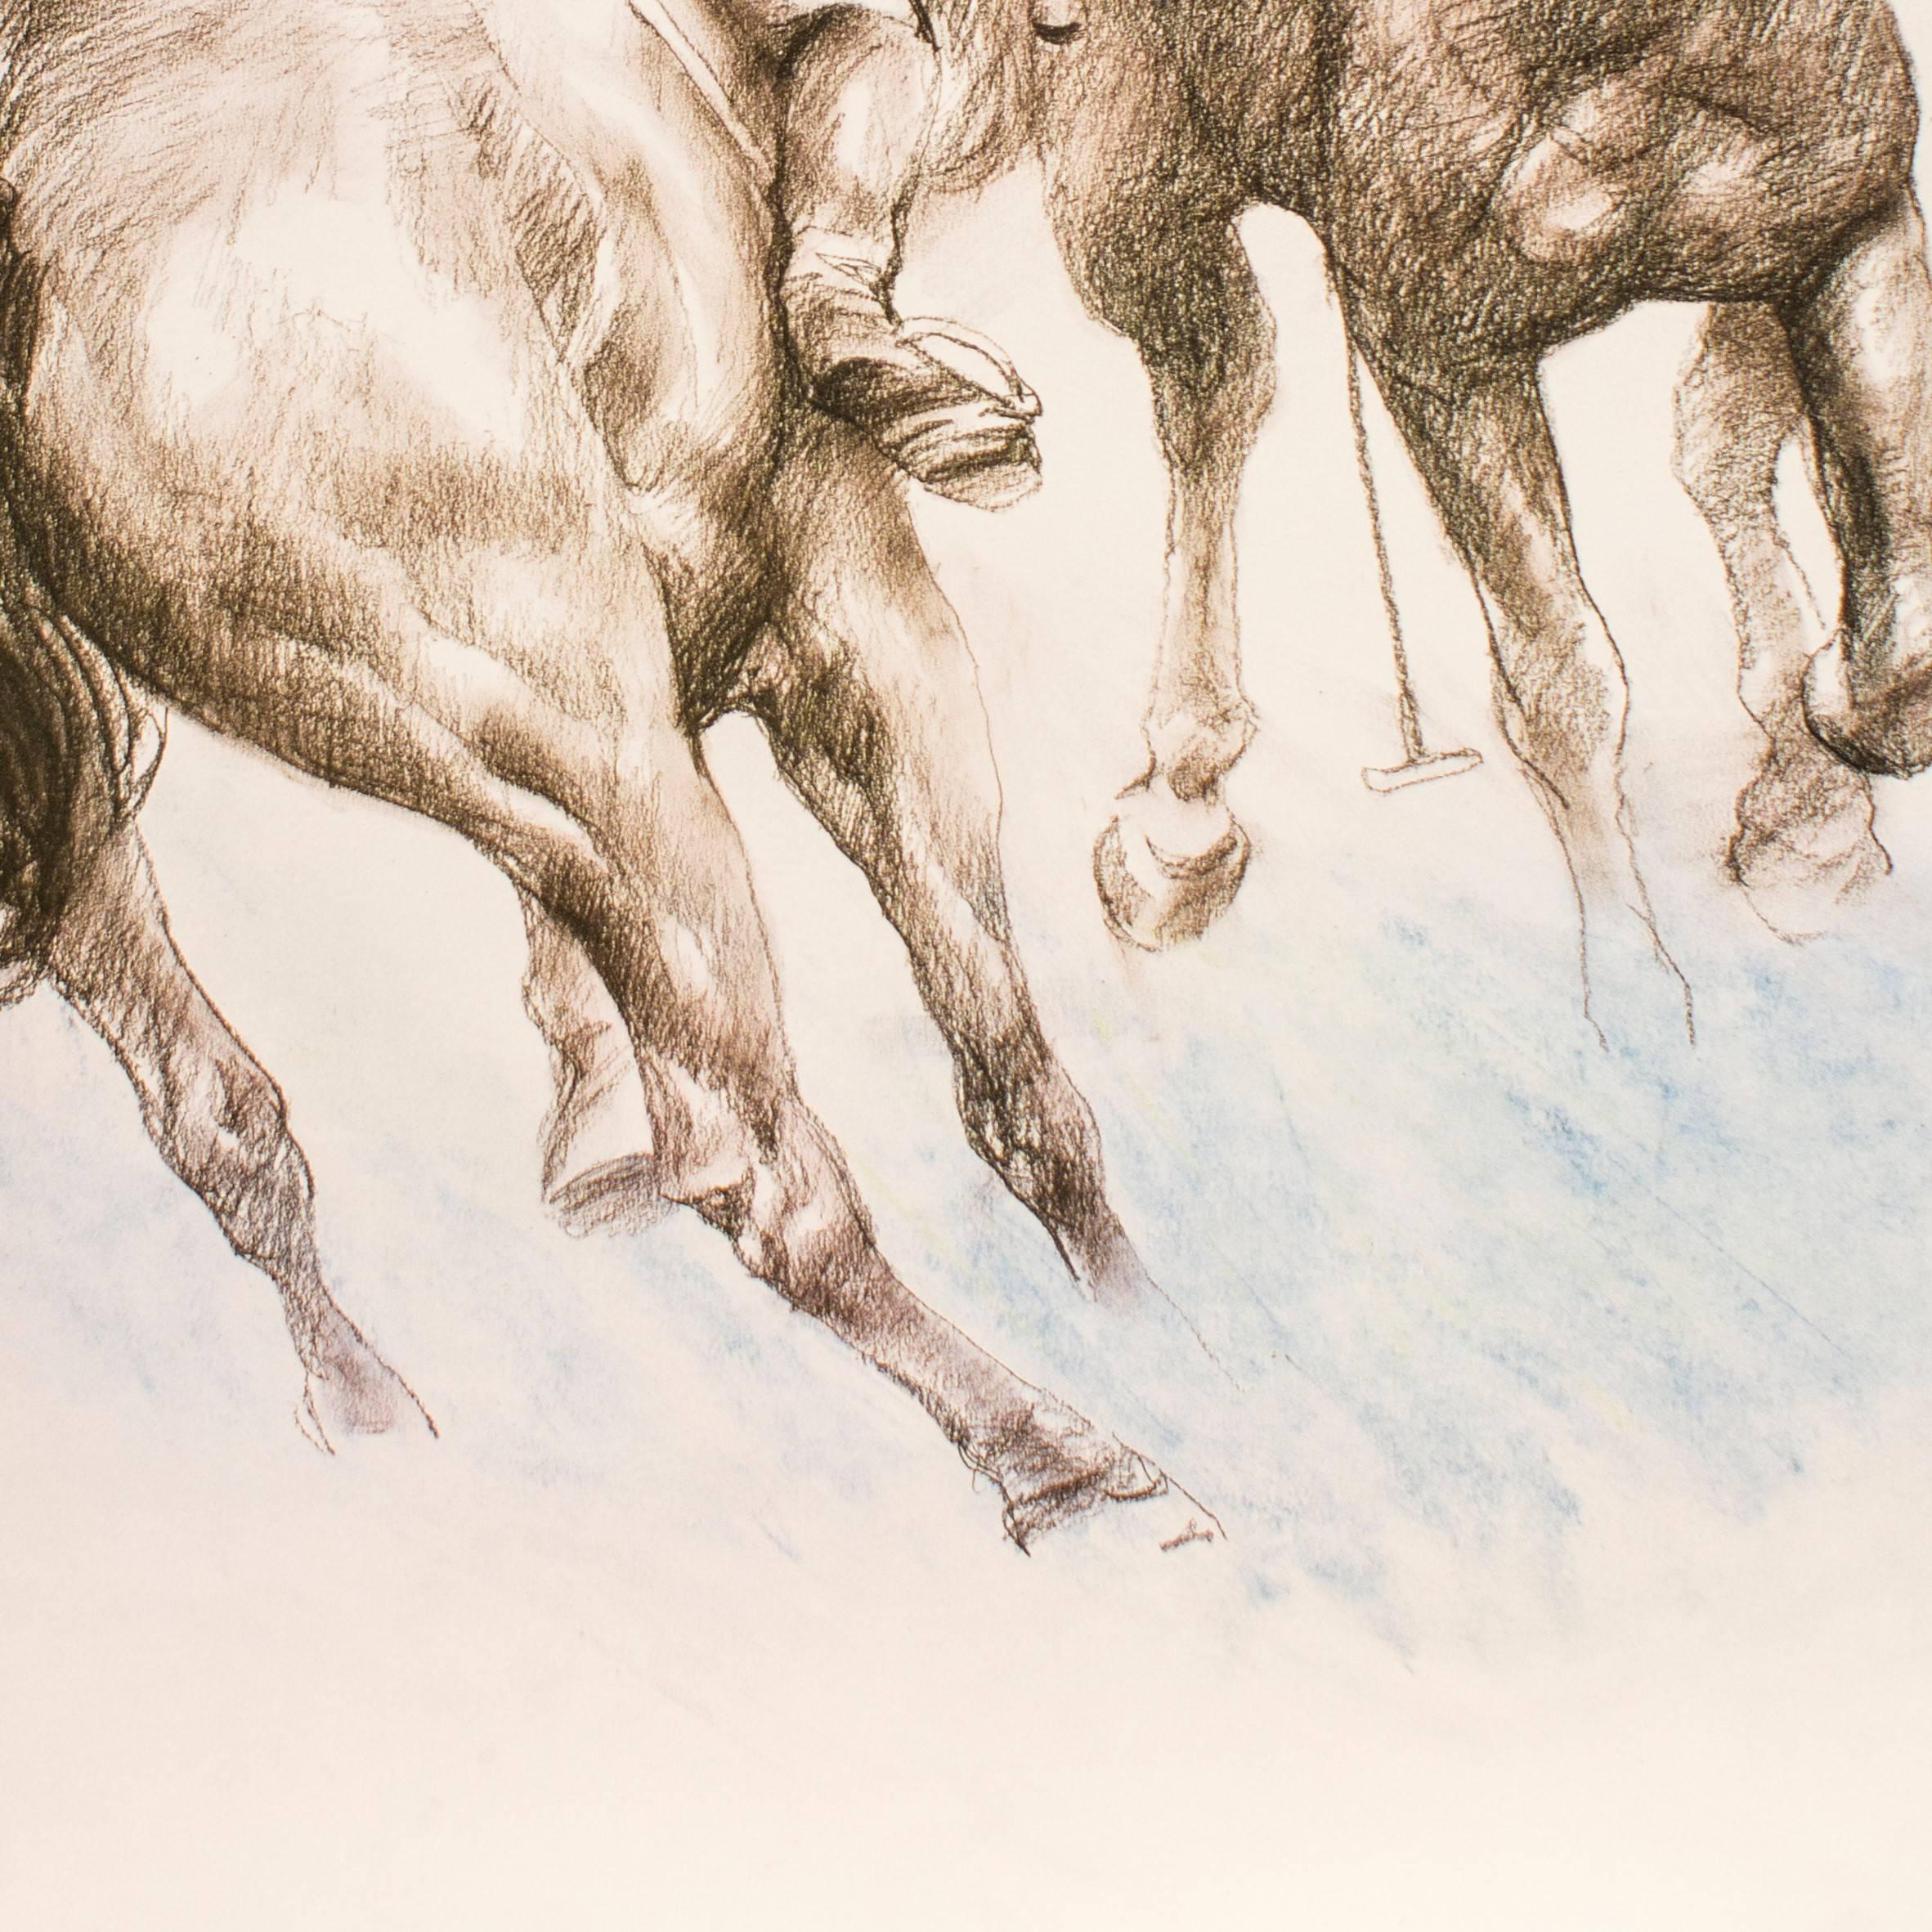 Equestrian, Olympic Games Beijing 2008 - Beige Animal Print by Zhou Zhiwei